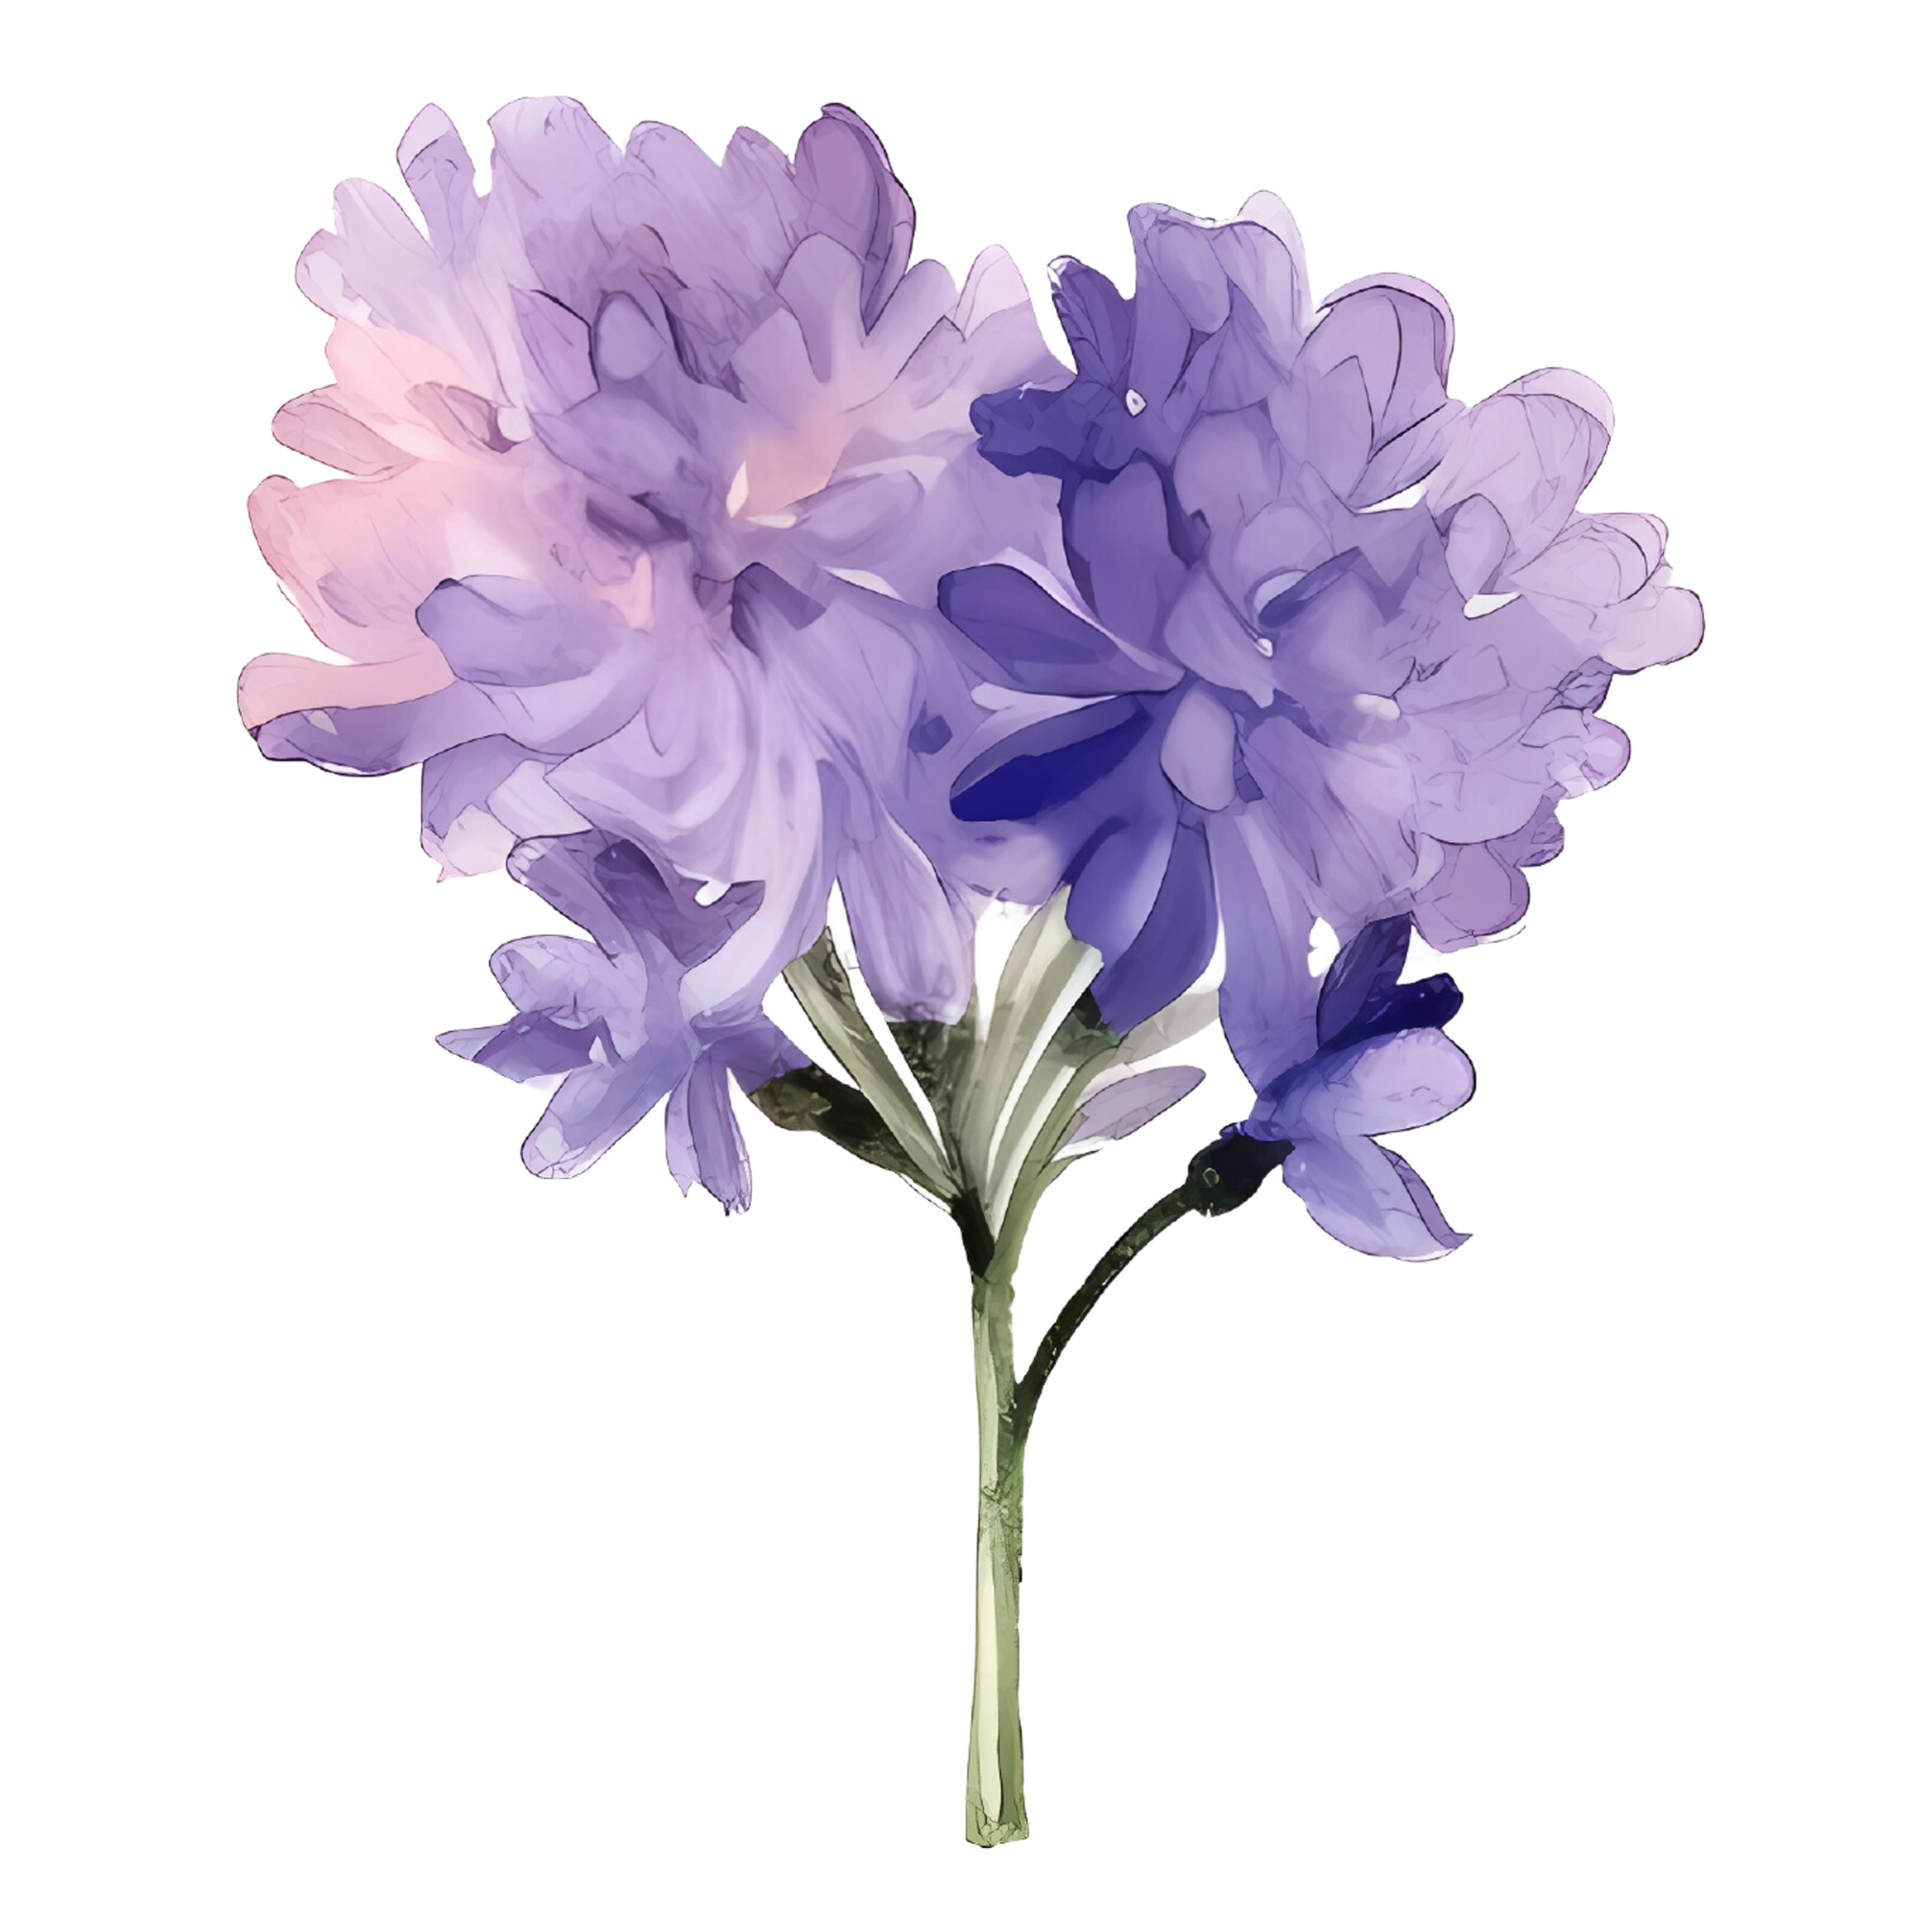 8,055 Lavender Plant Dried Flower Flower Fragrance Images, Stock Photos, 3D  objects, & Vectors